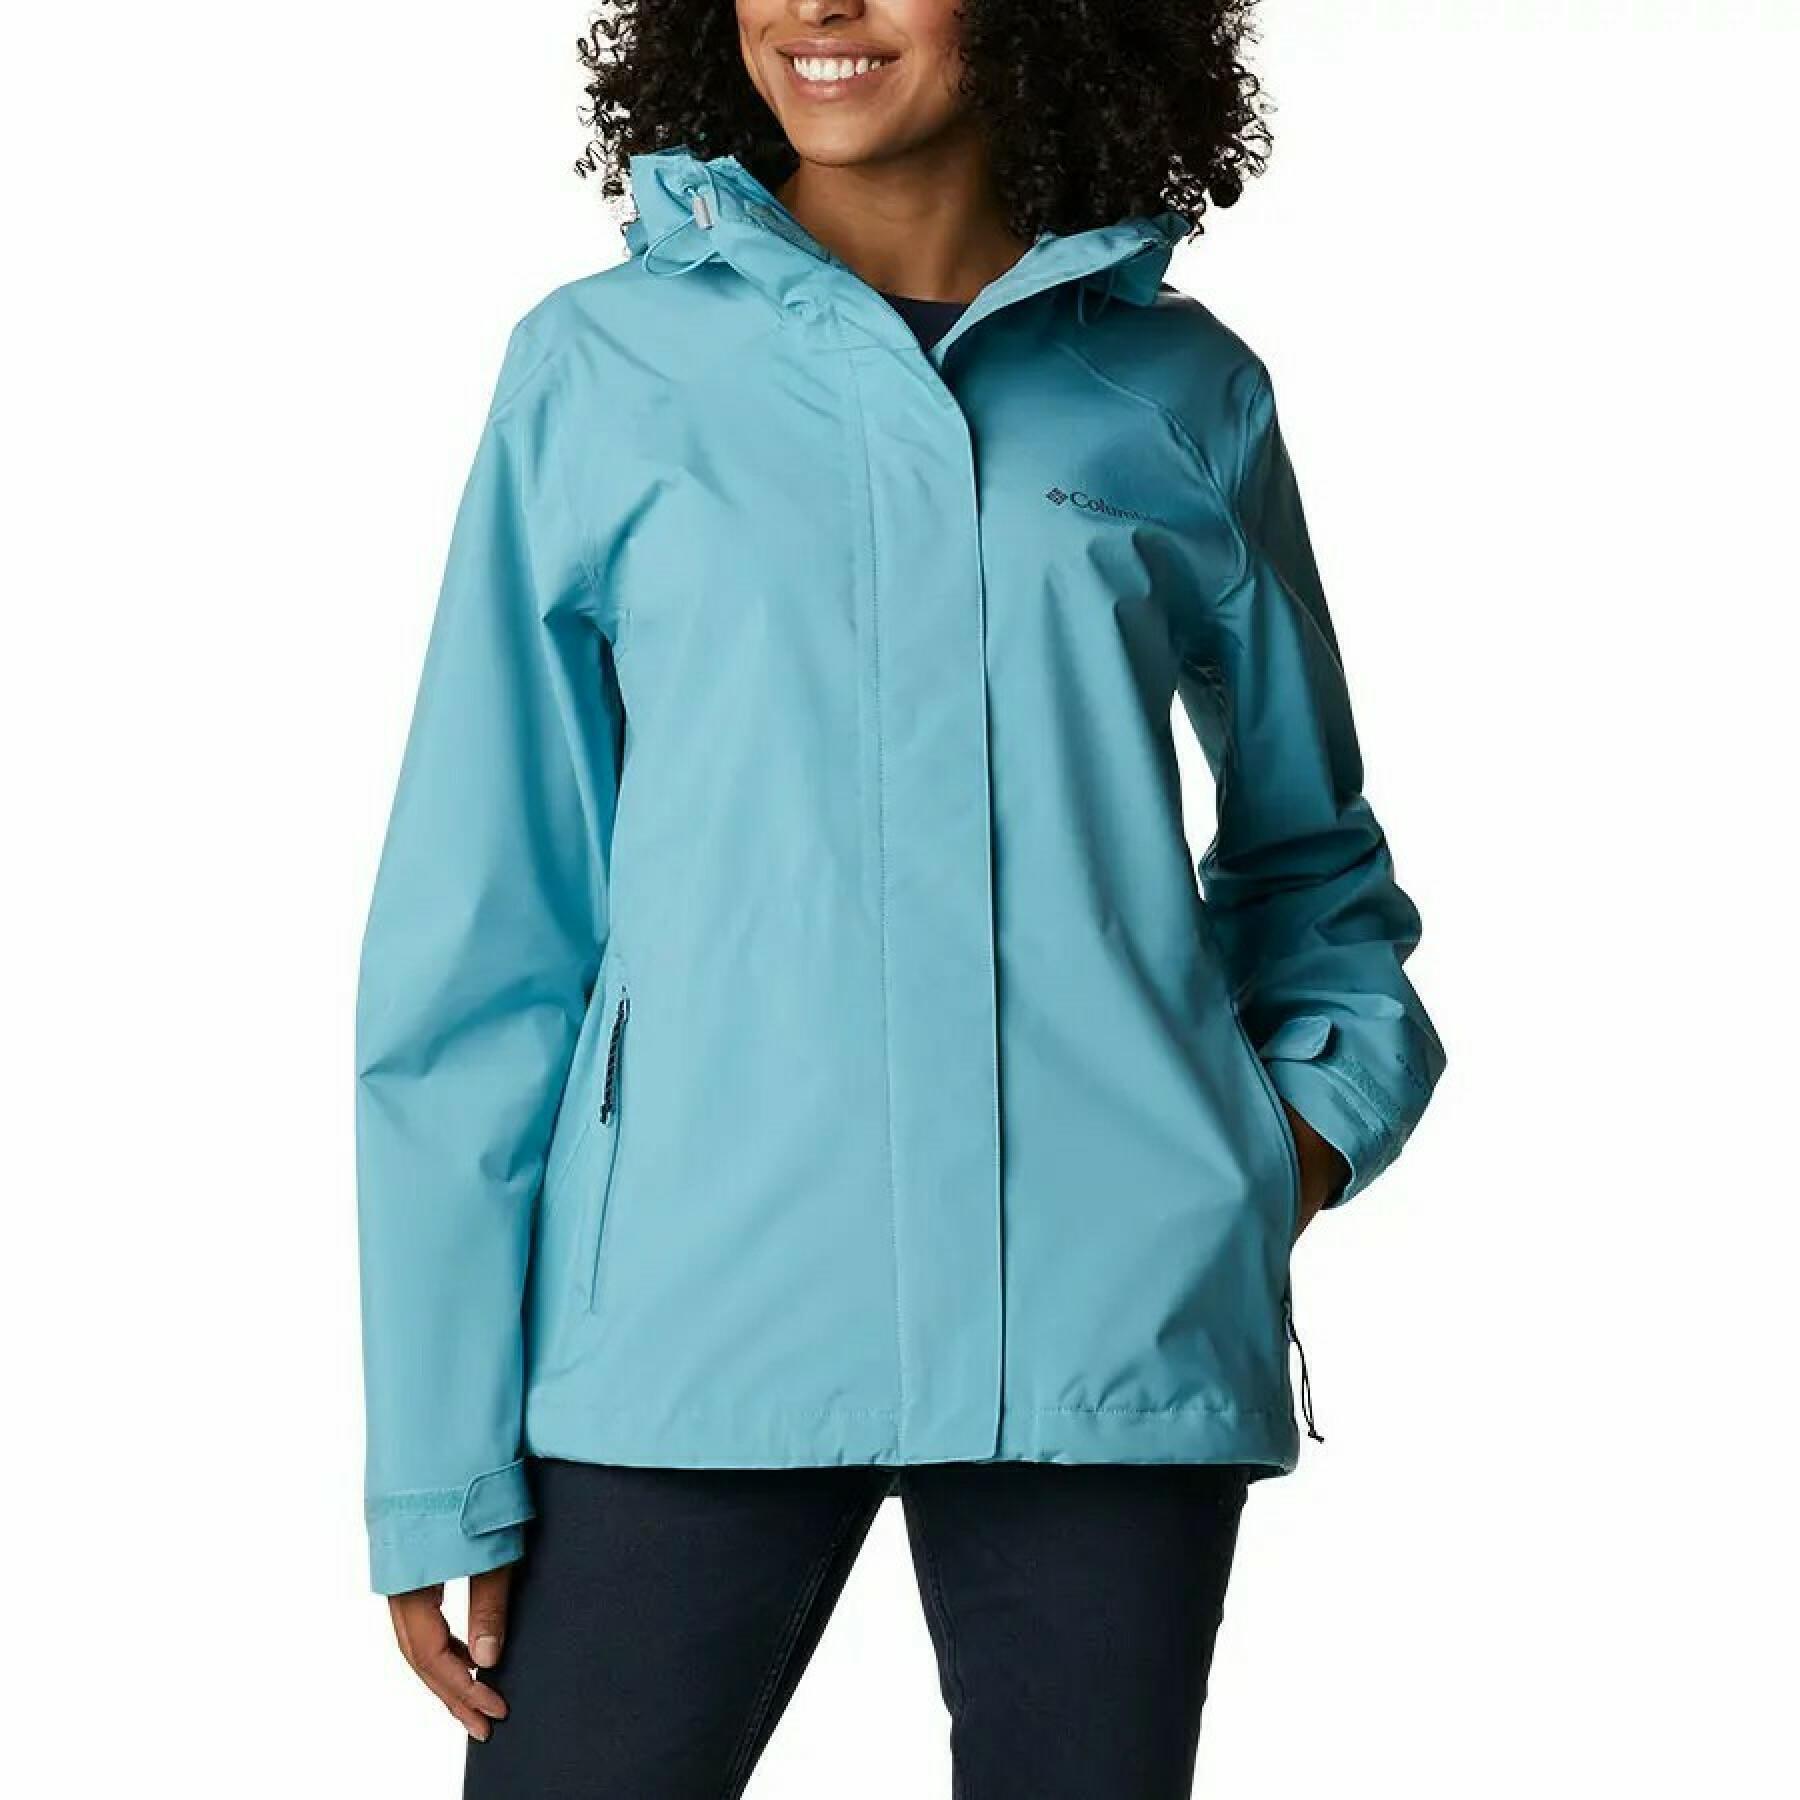 Women's jacket Columbia Earth Explorer Shell